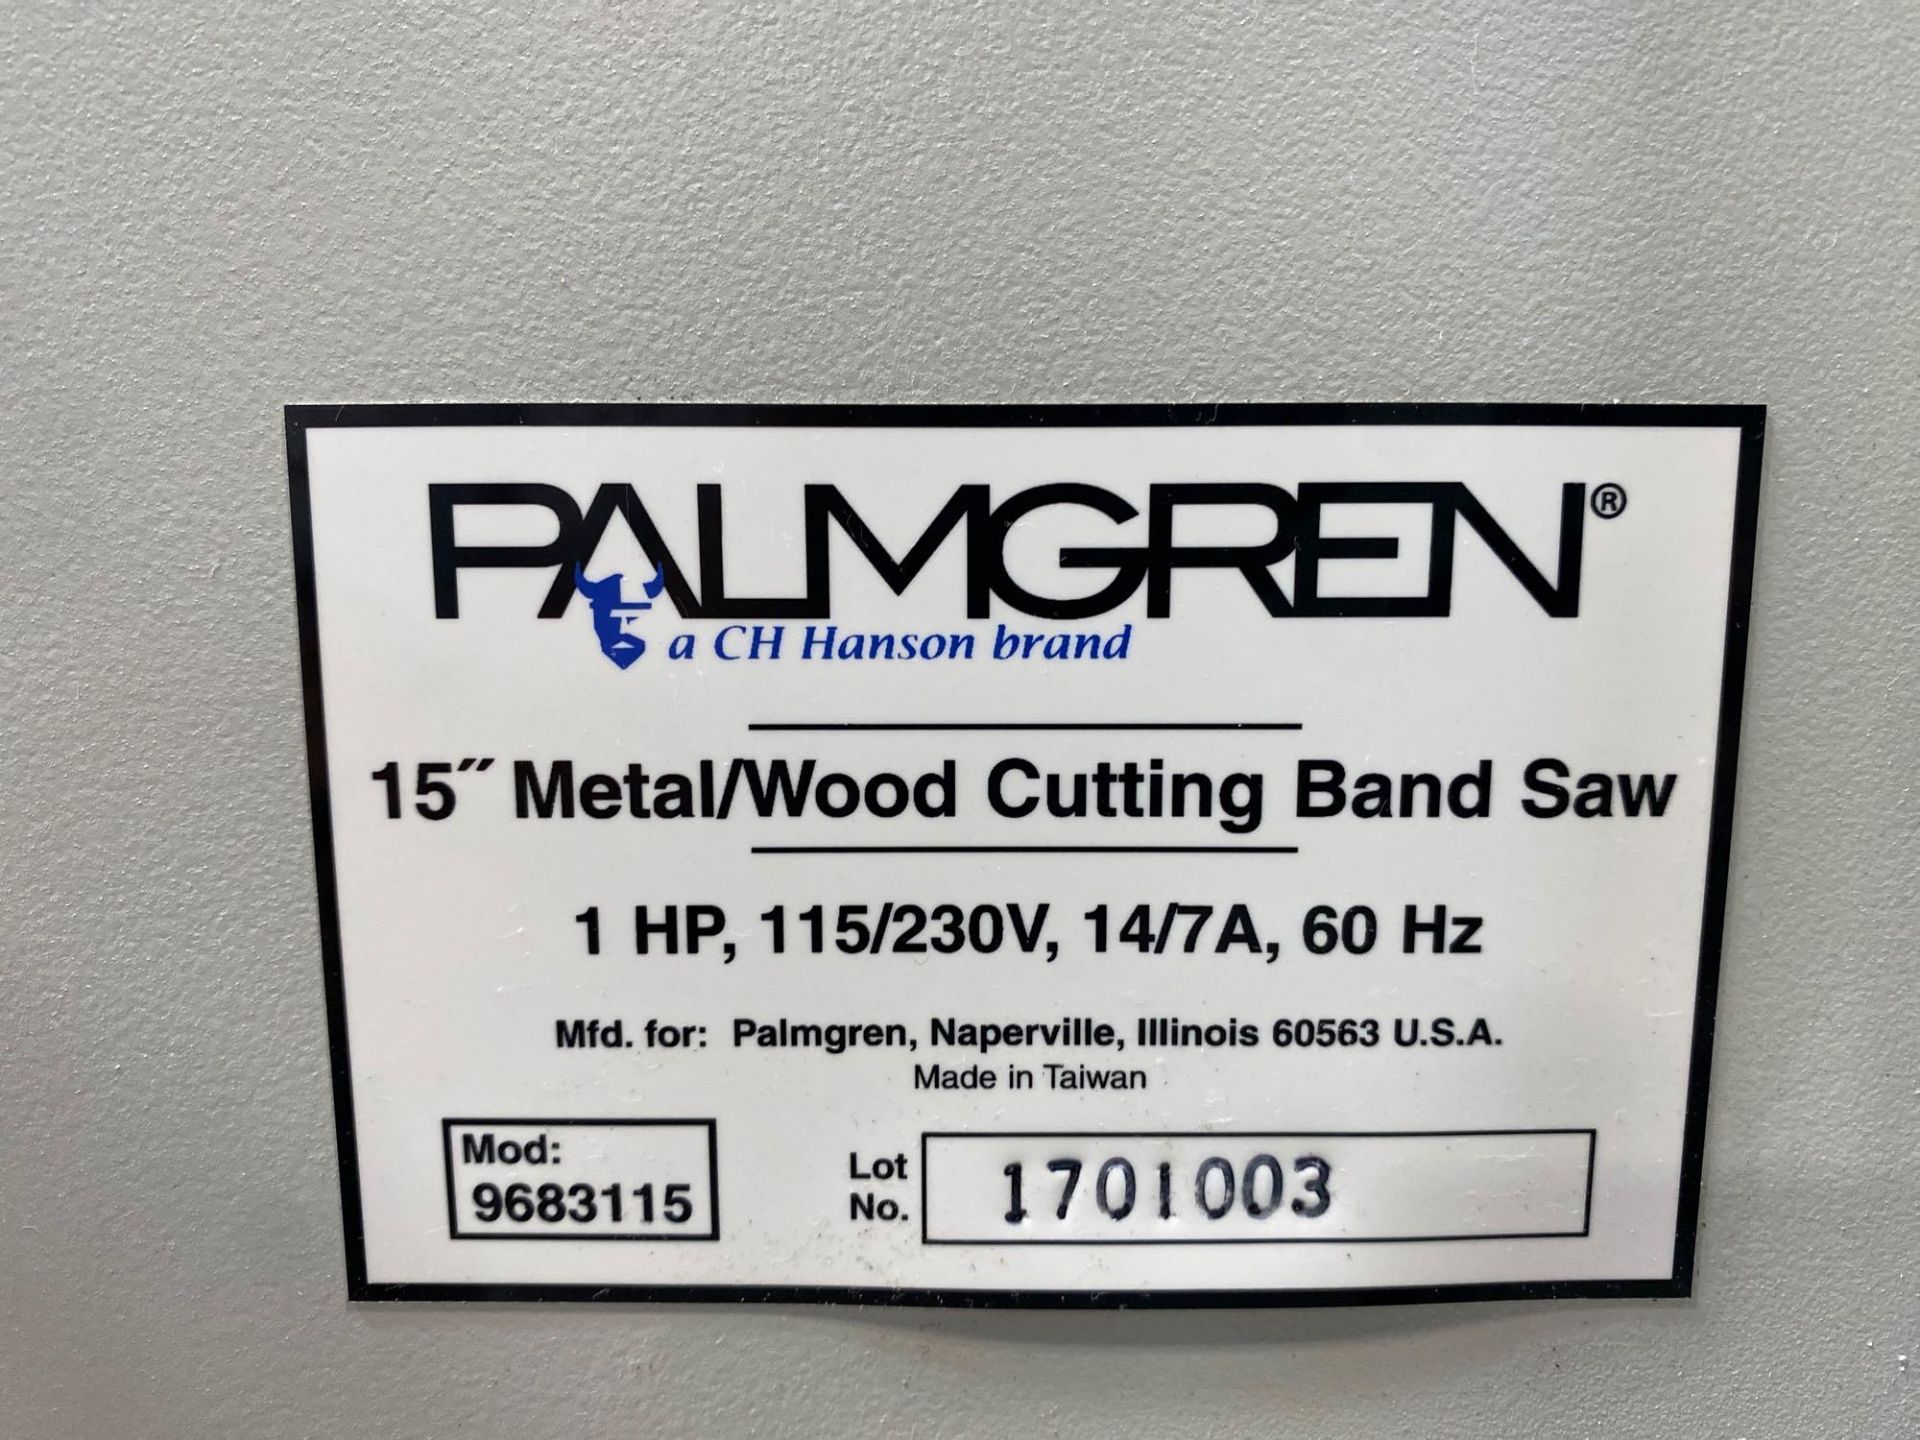 Palmgreen 15" Metal/Wood Cutting Band Saw, m/n 9683115, s/n 1701003 - Image 4 of 4